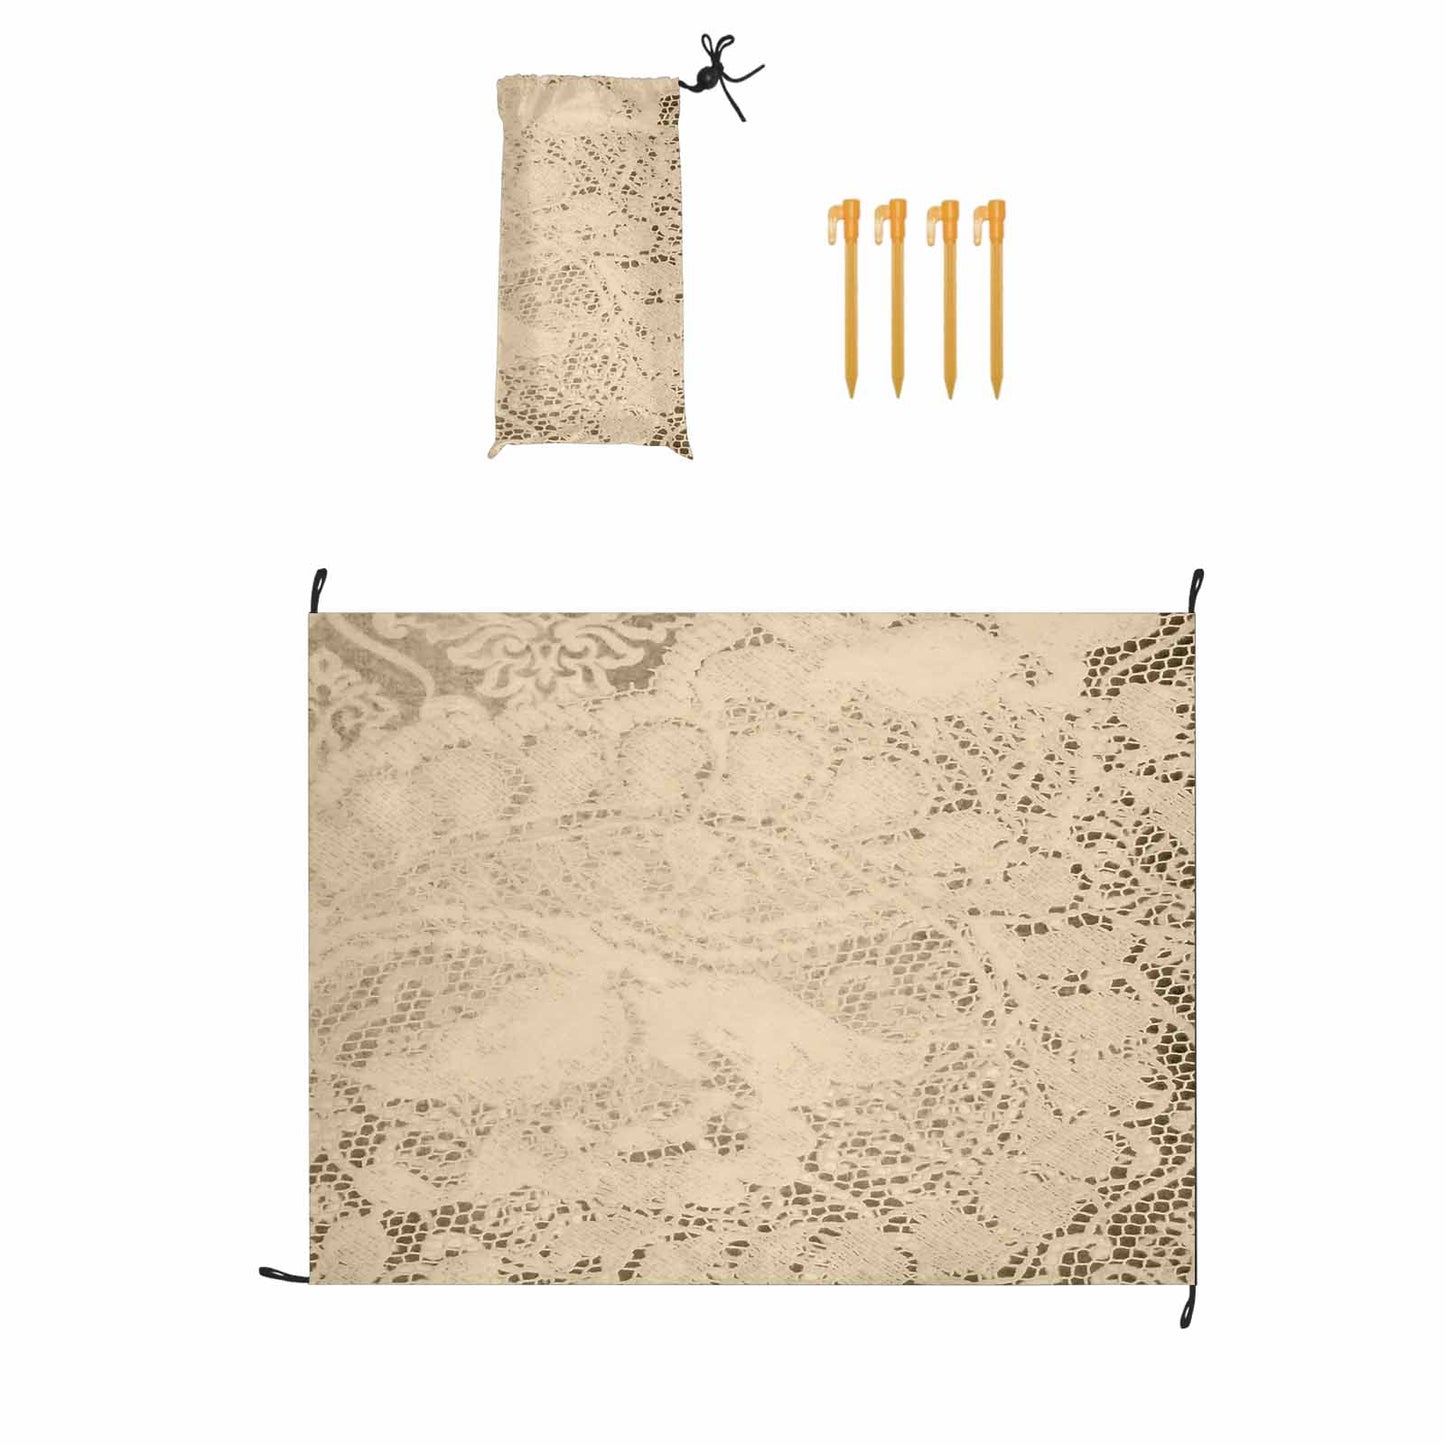 Victorian lace print waterproof picnic mat, 69 x 55in, design 26